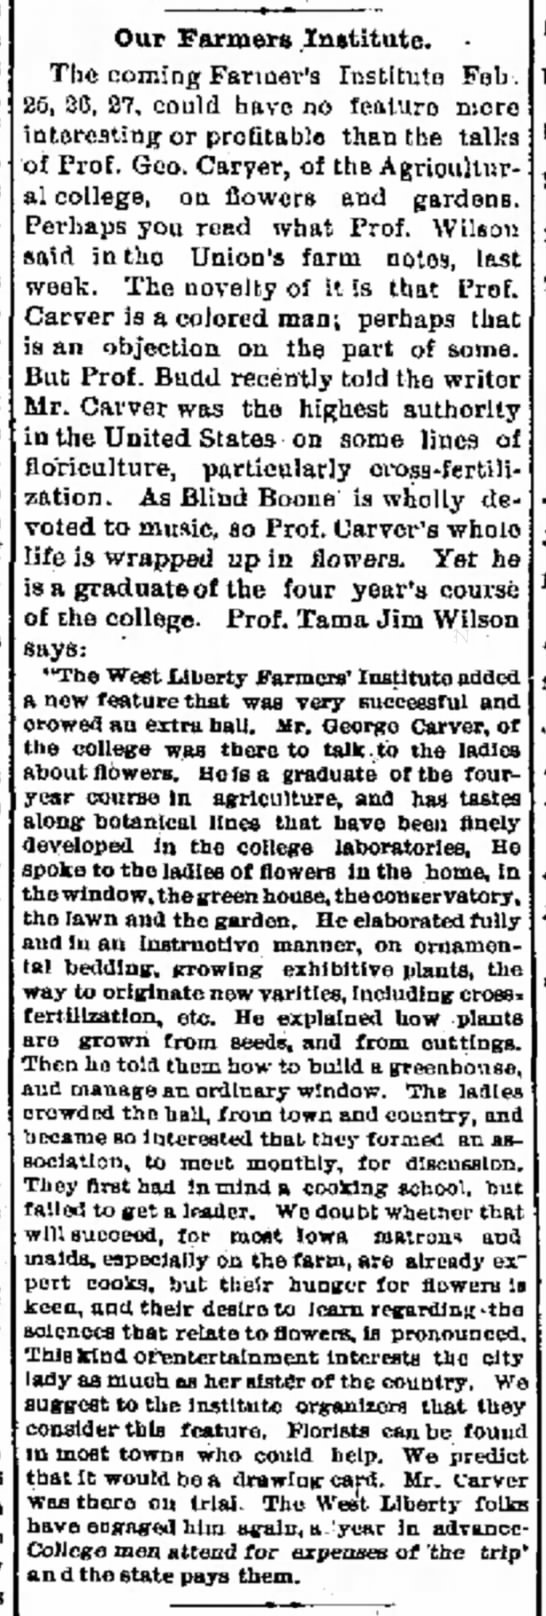 George Washington Carver teaches Iowa women about flowers and gardens, 1896 - 